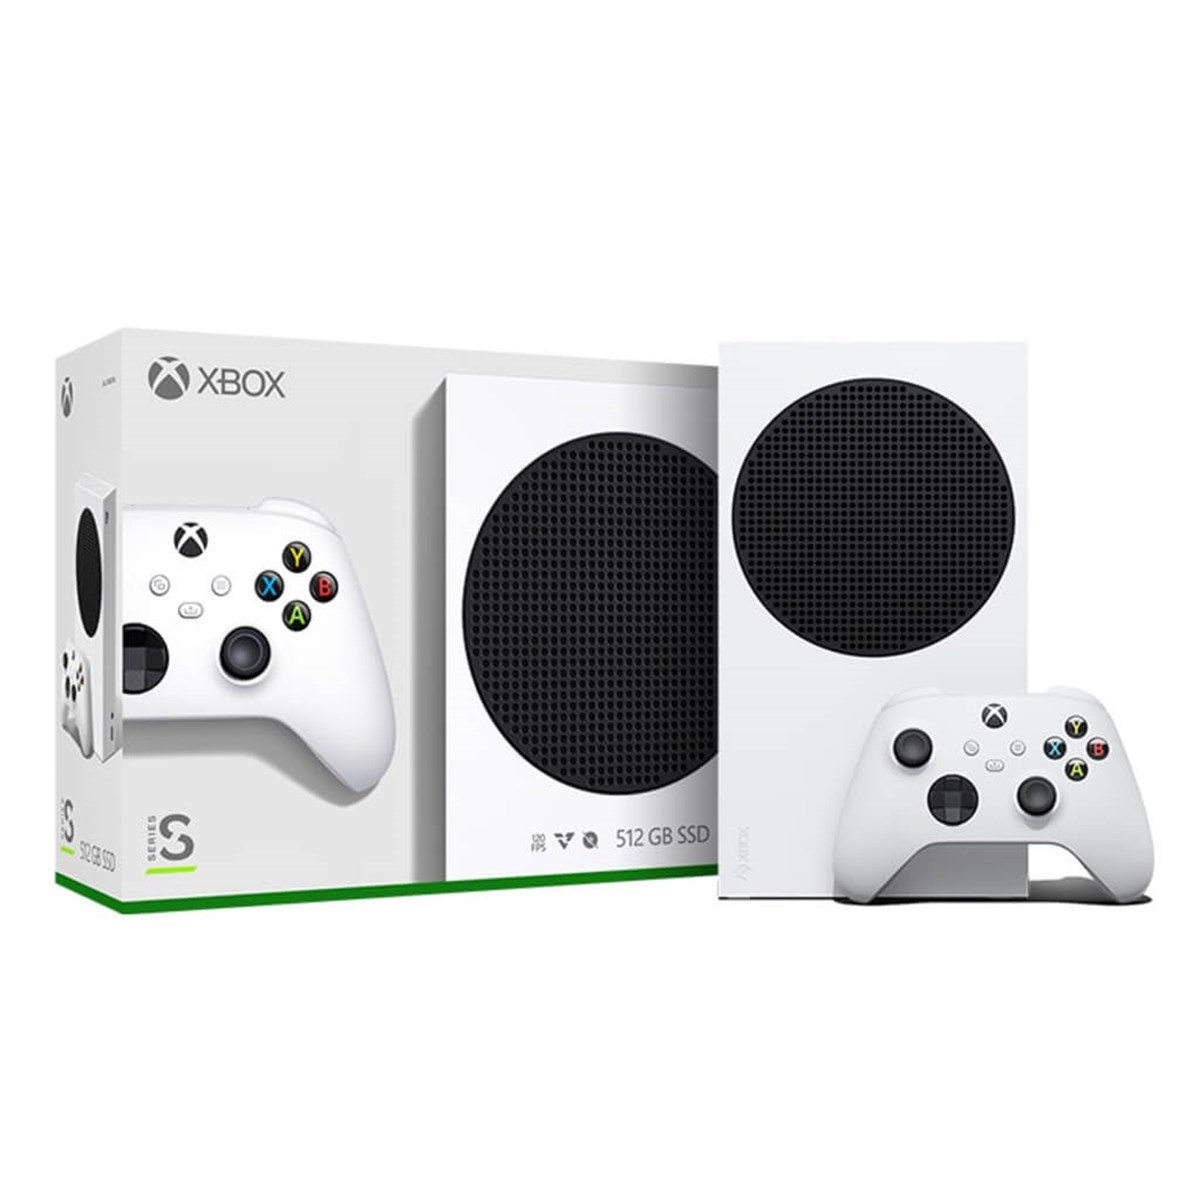 Microsoft Xbox One Series S 512 GB SSD konsolkulubu.com